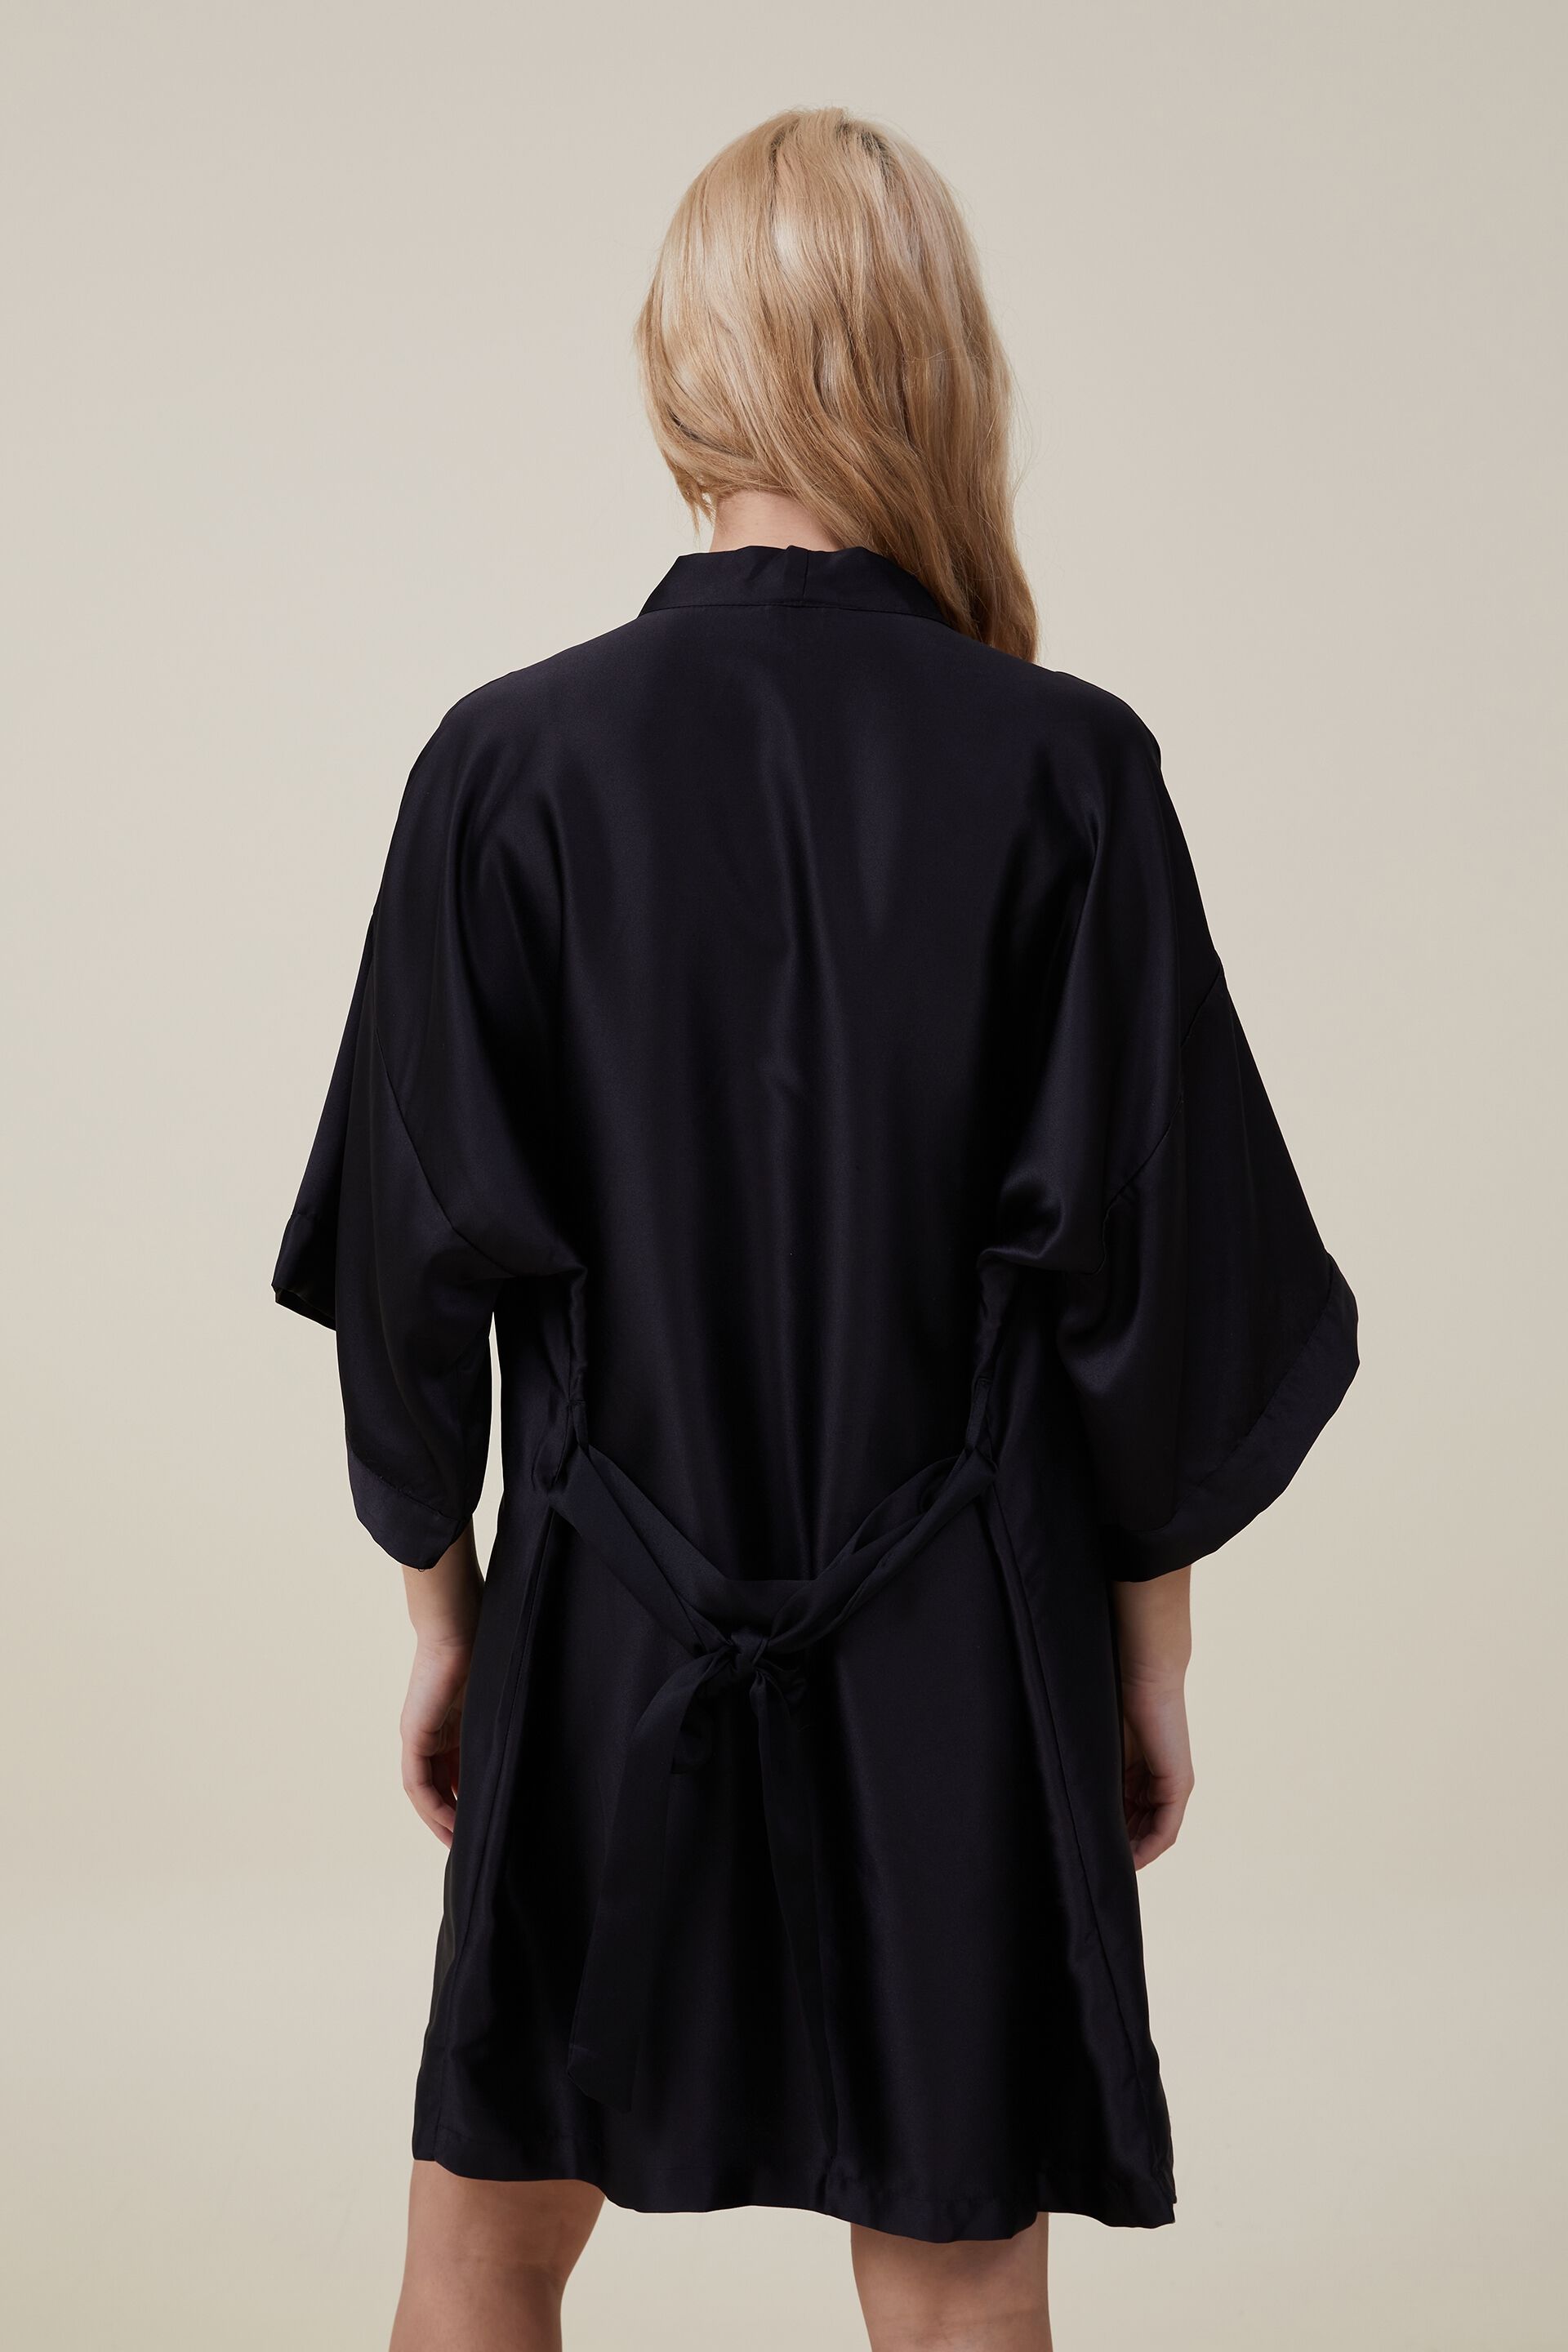 Satin Plain Ruffle Robe Black Size Free